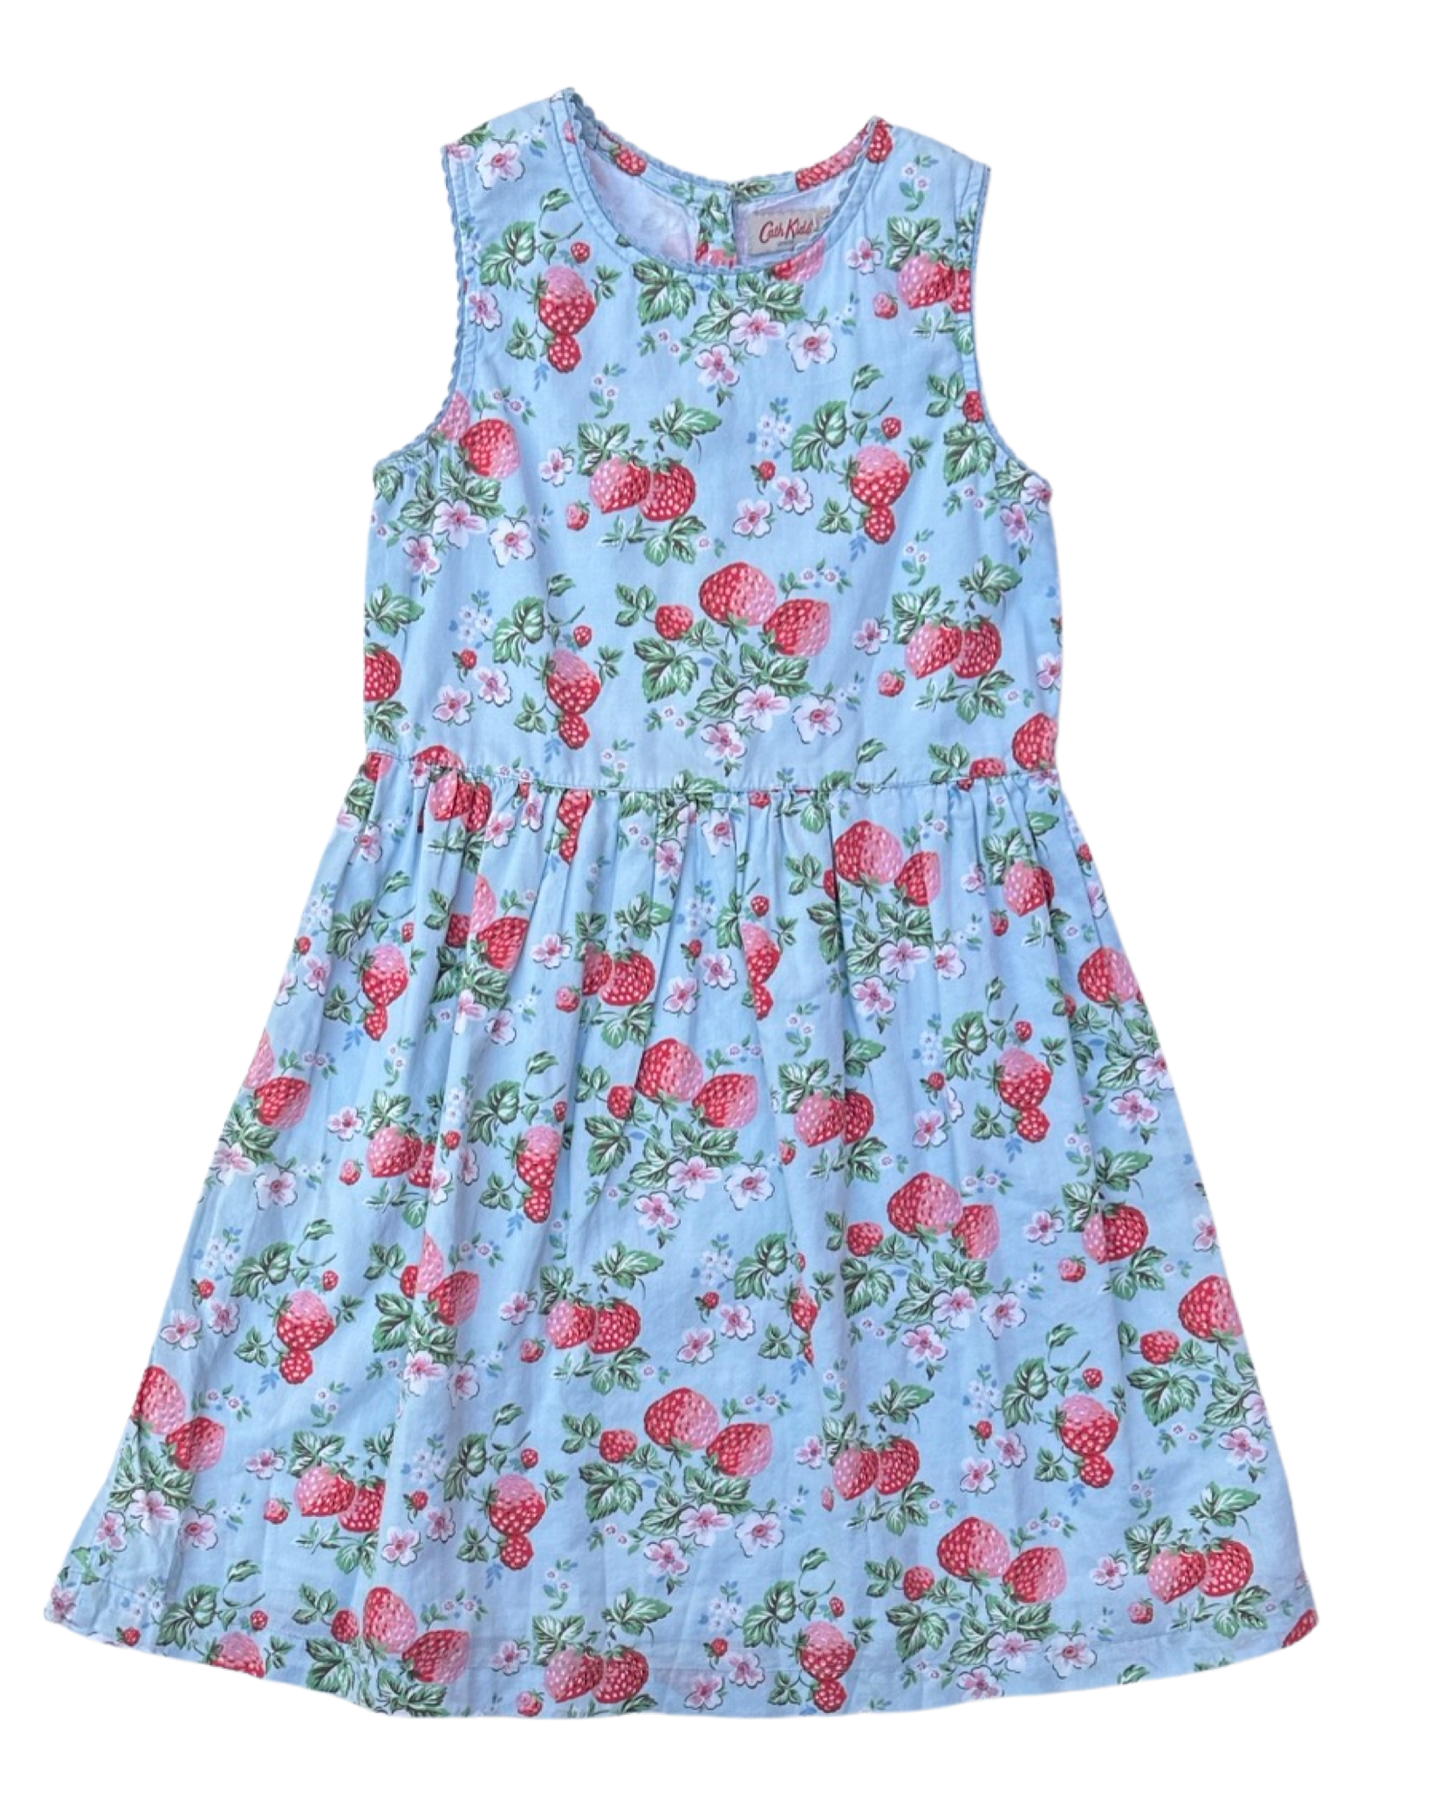 Cath Kids strawberry print dress (size 6yrs)